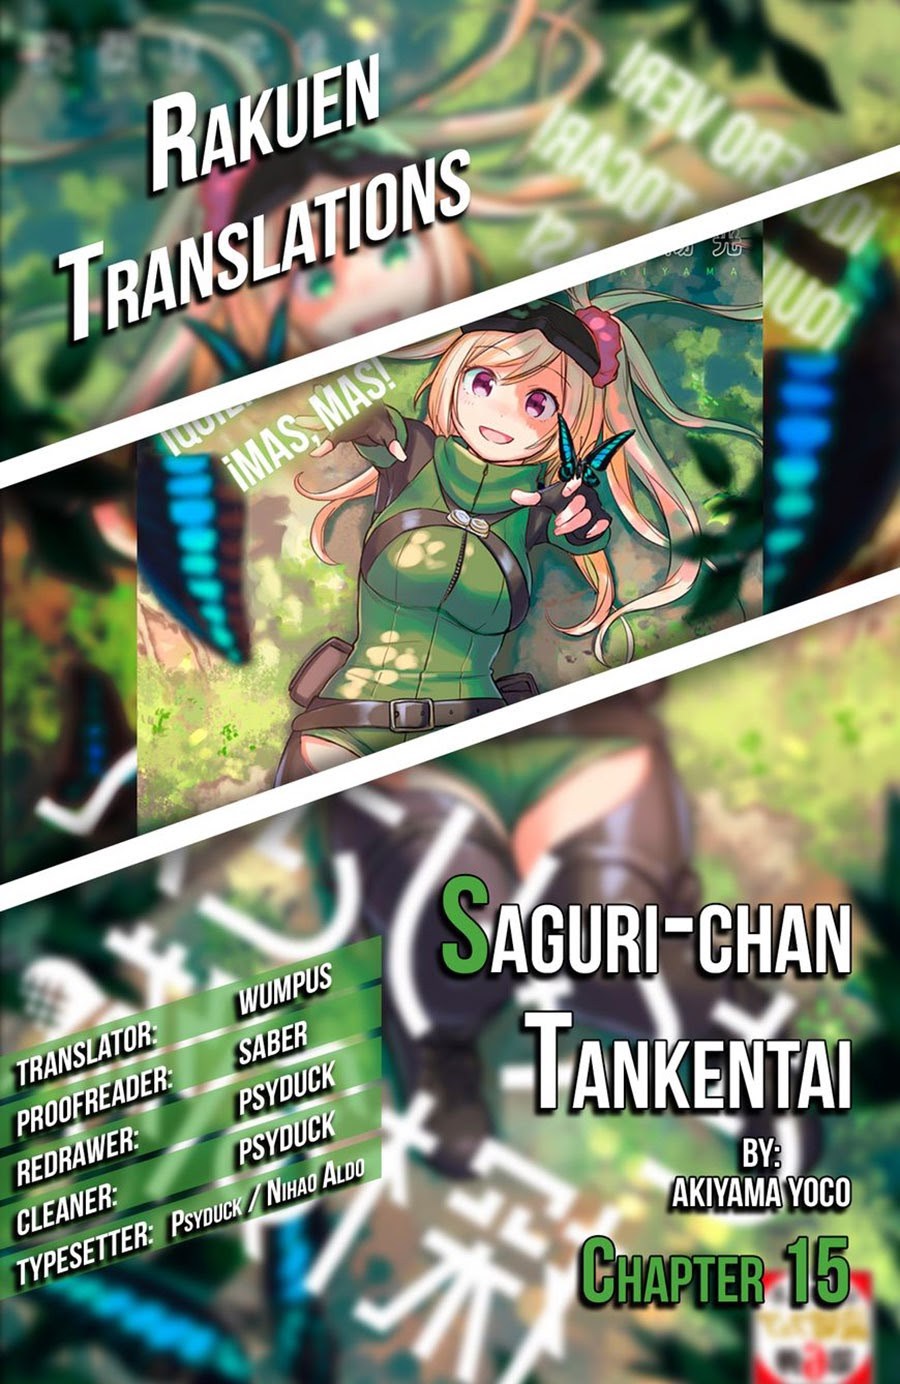 Saguri-chan Tankentai Chapter 15